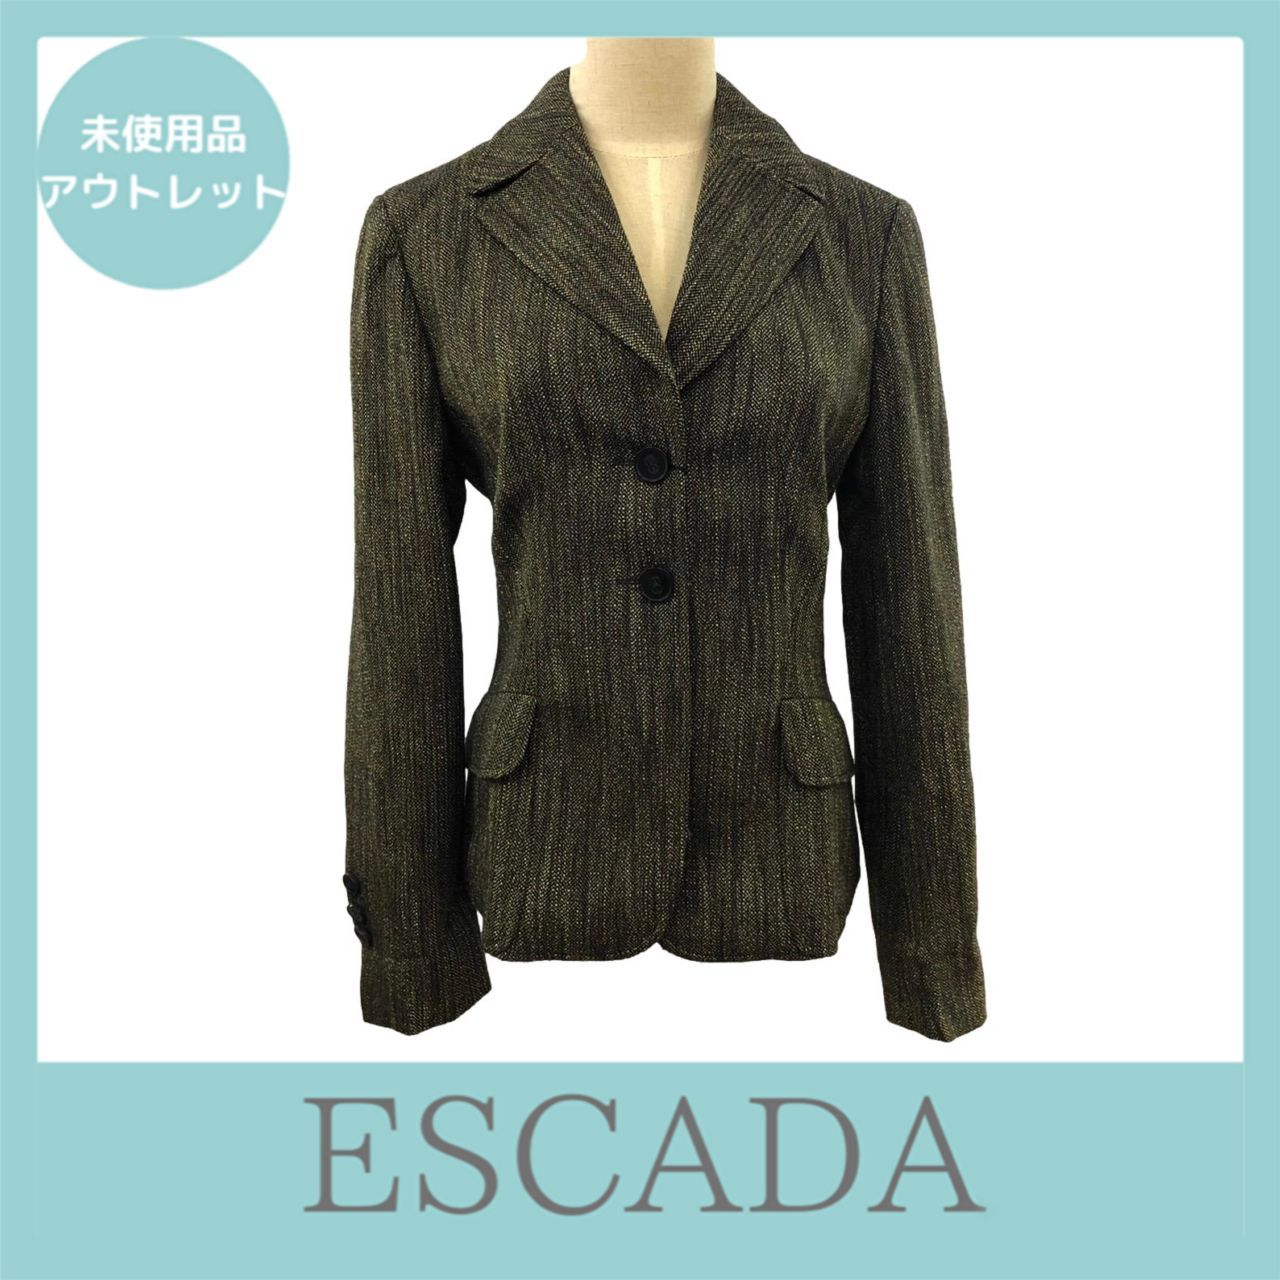 ESCADA テーラード ジャケット マルチカラー 34 サイズ - メルカリ